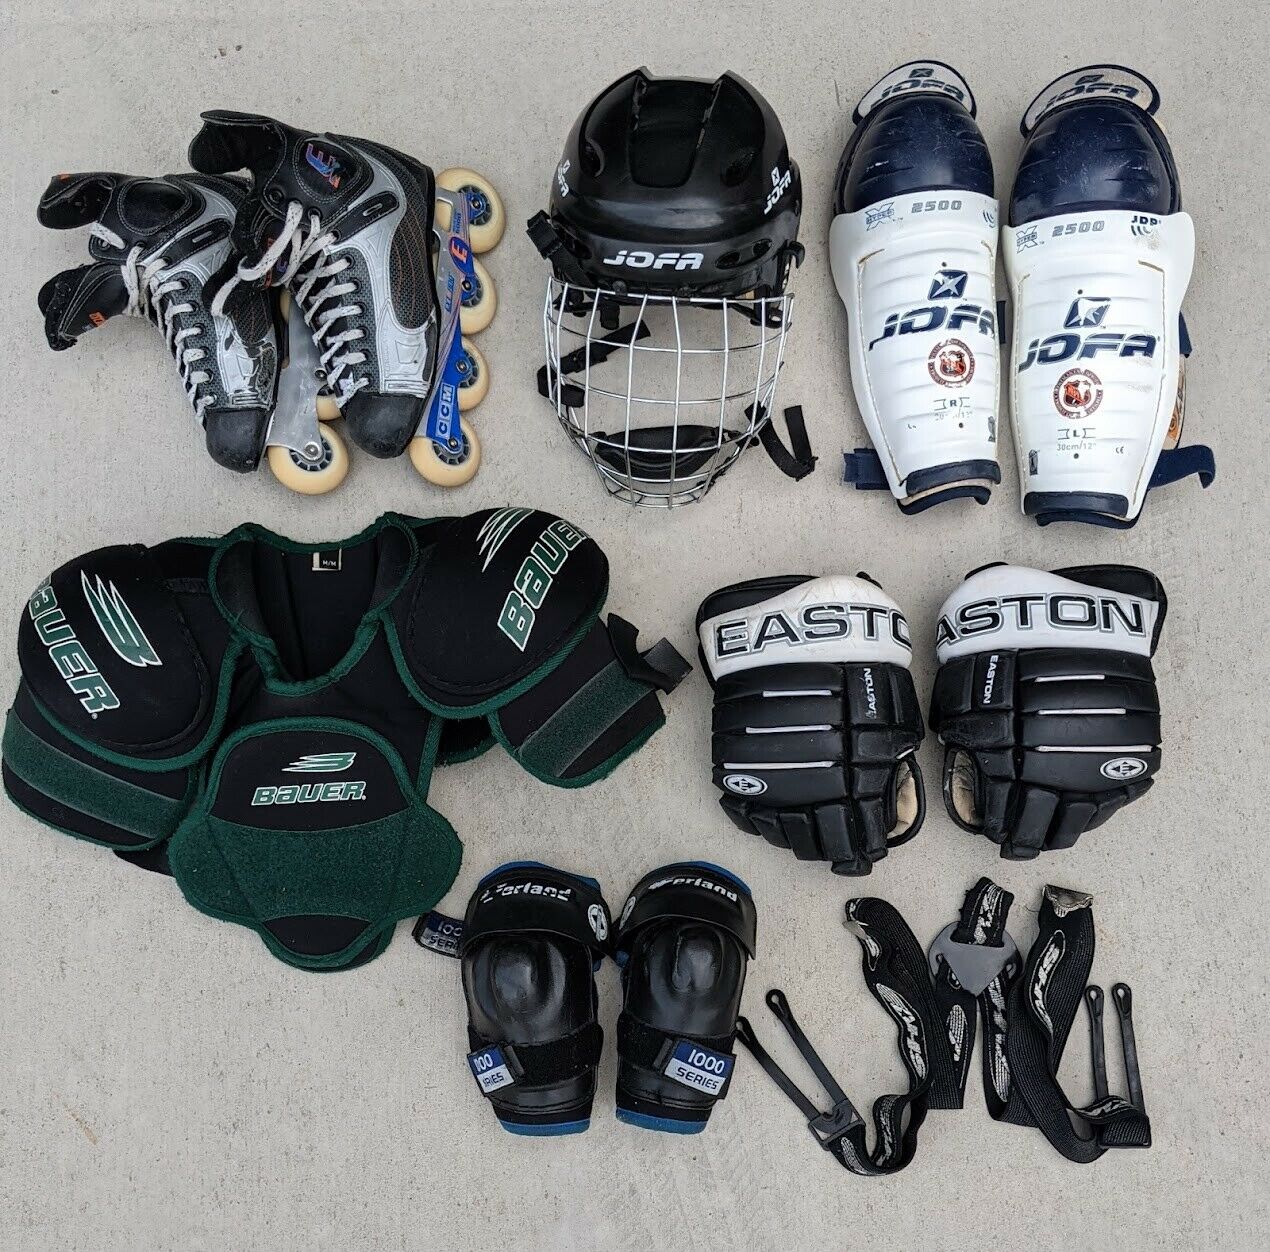 Roller Hockey Equipment Bundle - Skates, Helmet, Shin Guards, Bauer Bag, used